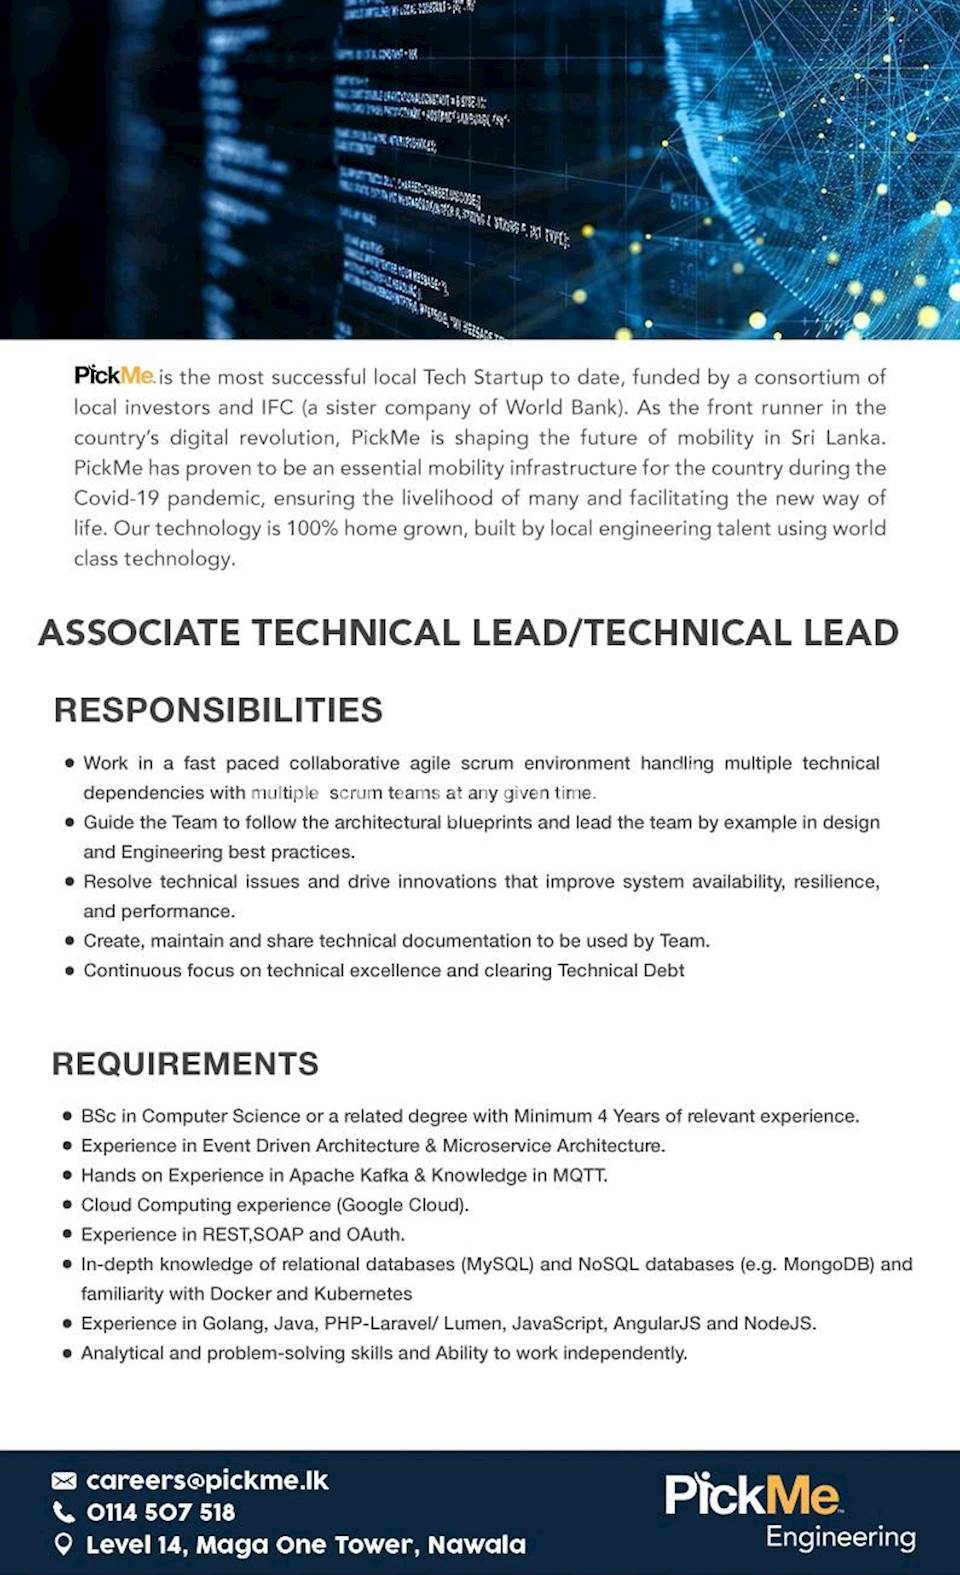 Associate Technical Lead / Technical Lead